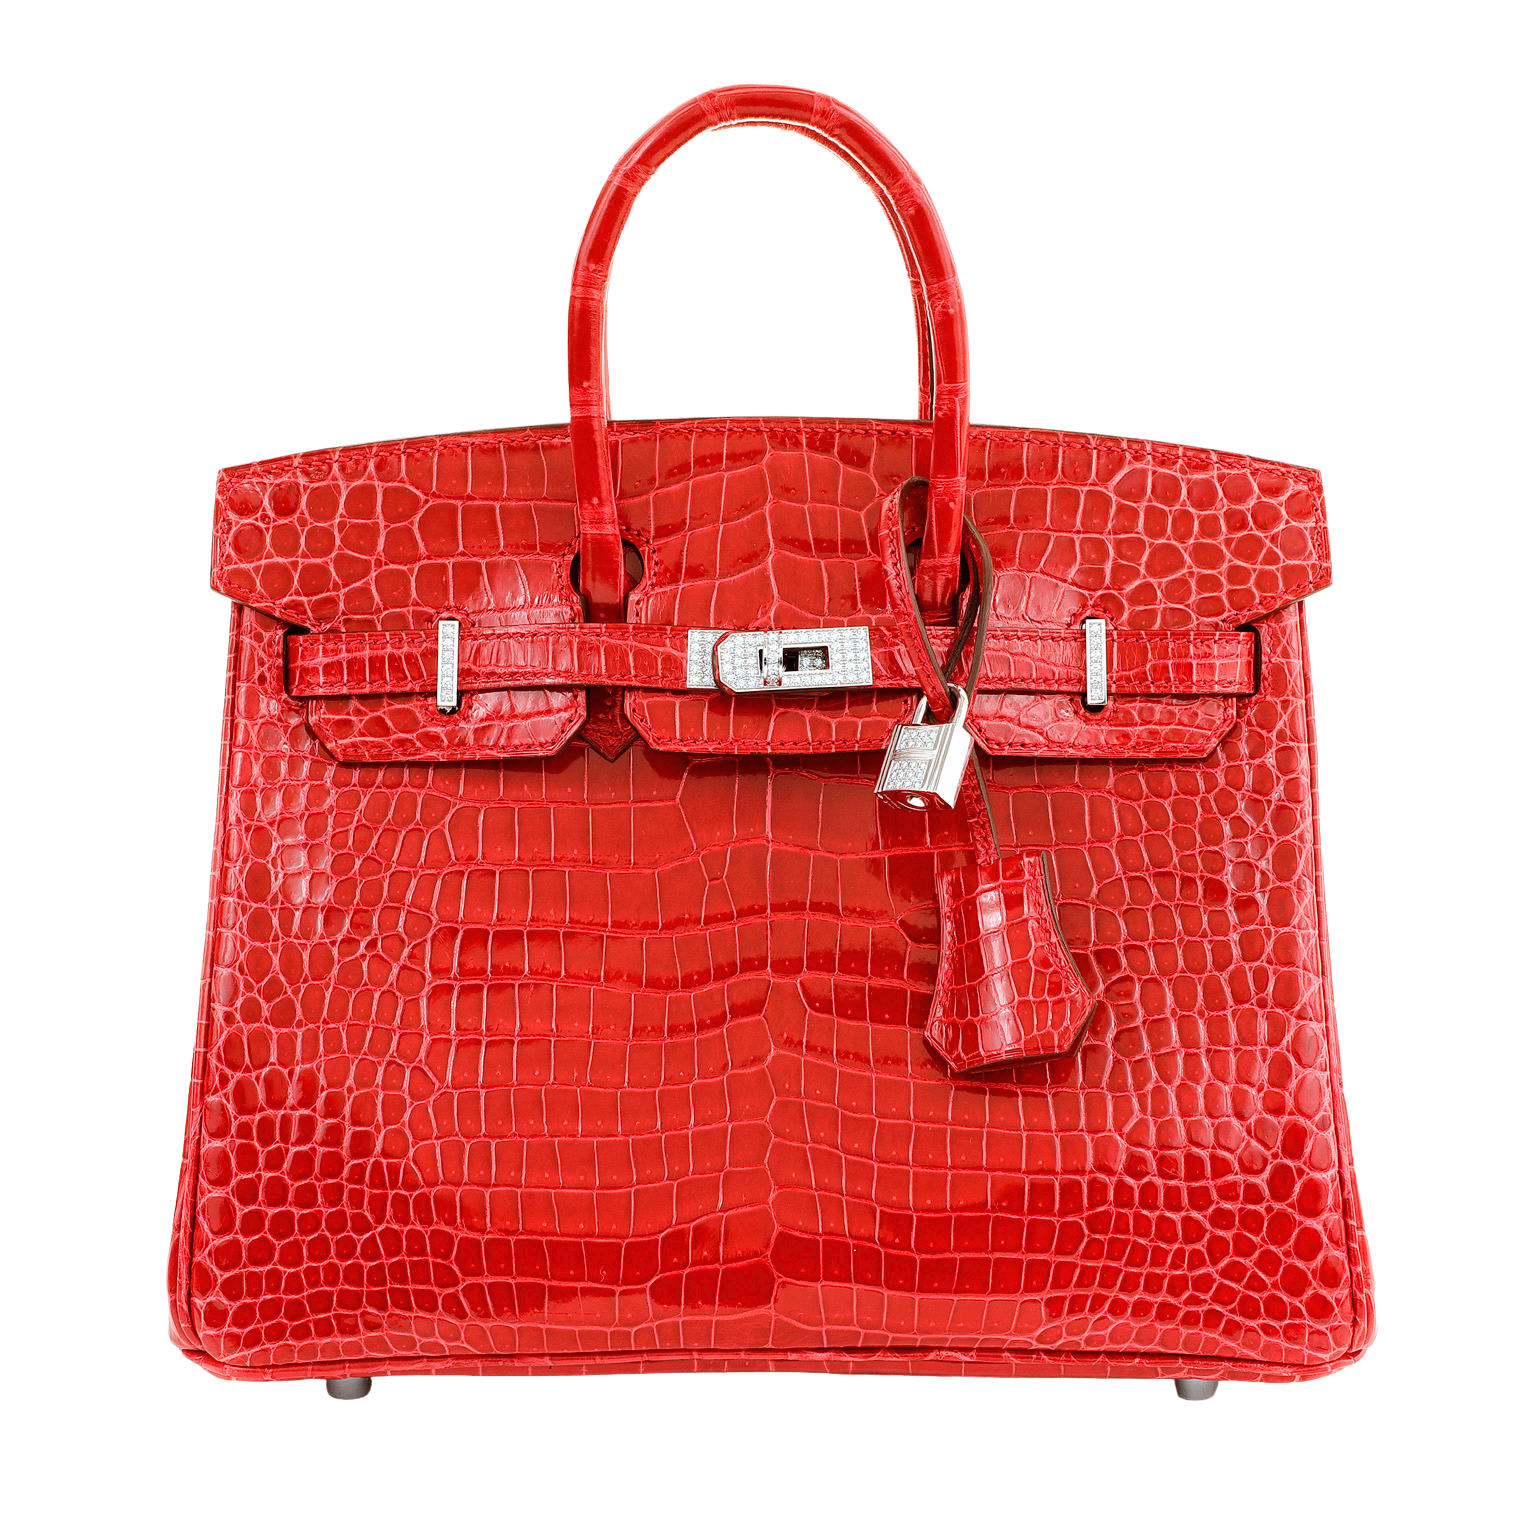 Hermes Birkin rarest limited edition bags ever - Luxuriate Life Magazine